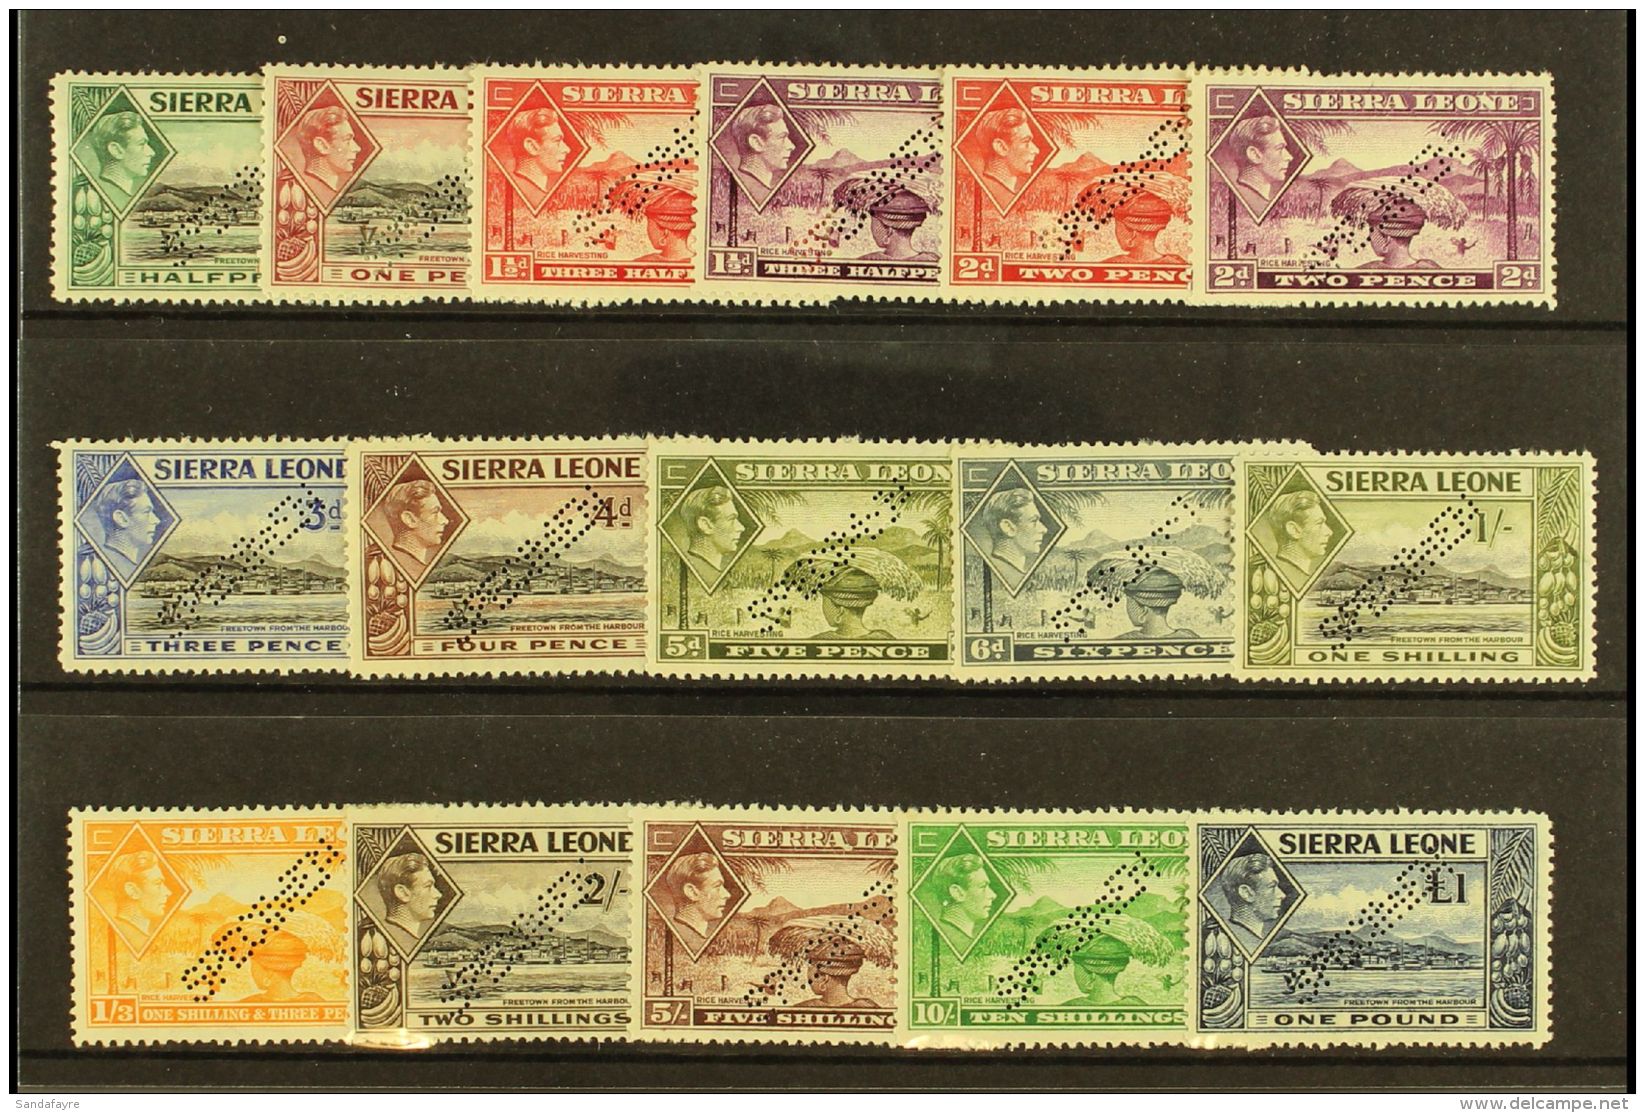 1938 Geo VI Set Complete, Perforated "Specimen", SG 188s/200s, Very Fine Mint, Large Part Og. Scarce Set. (16... - Sierra Leone (...-1960)